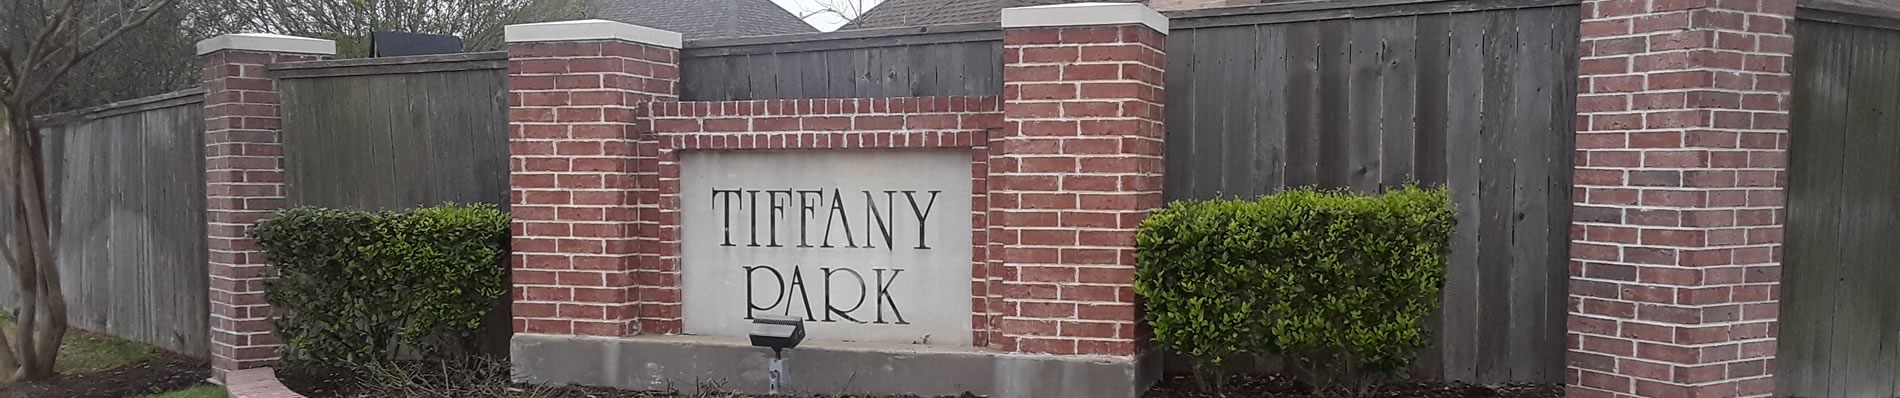 Tiffany Park Division in Bryan Texas